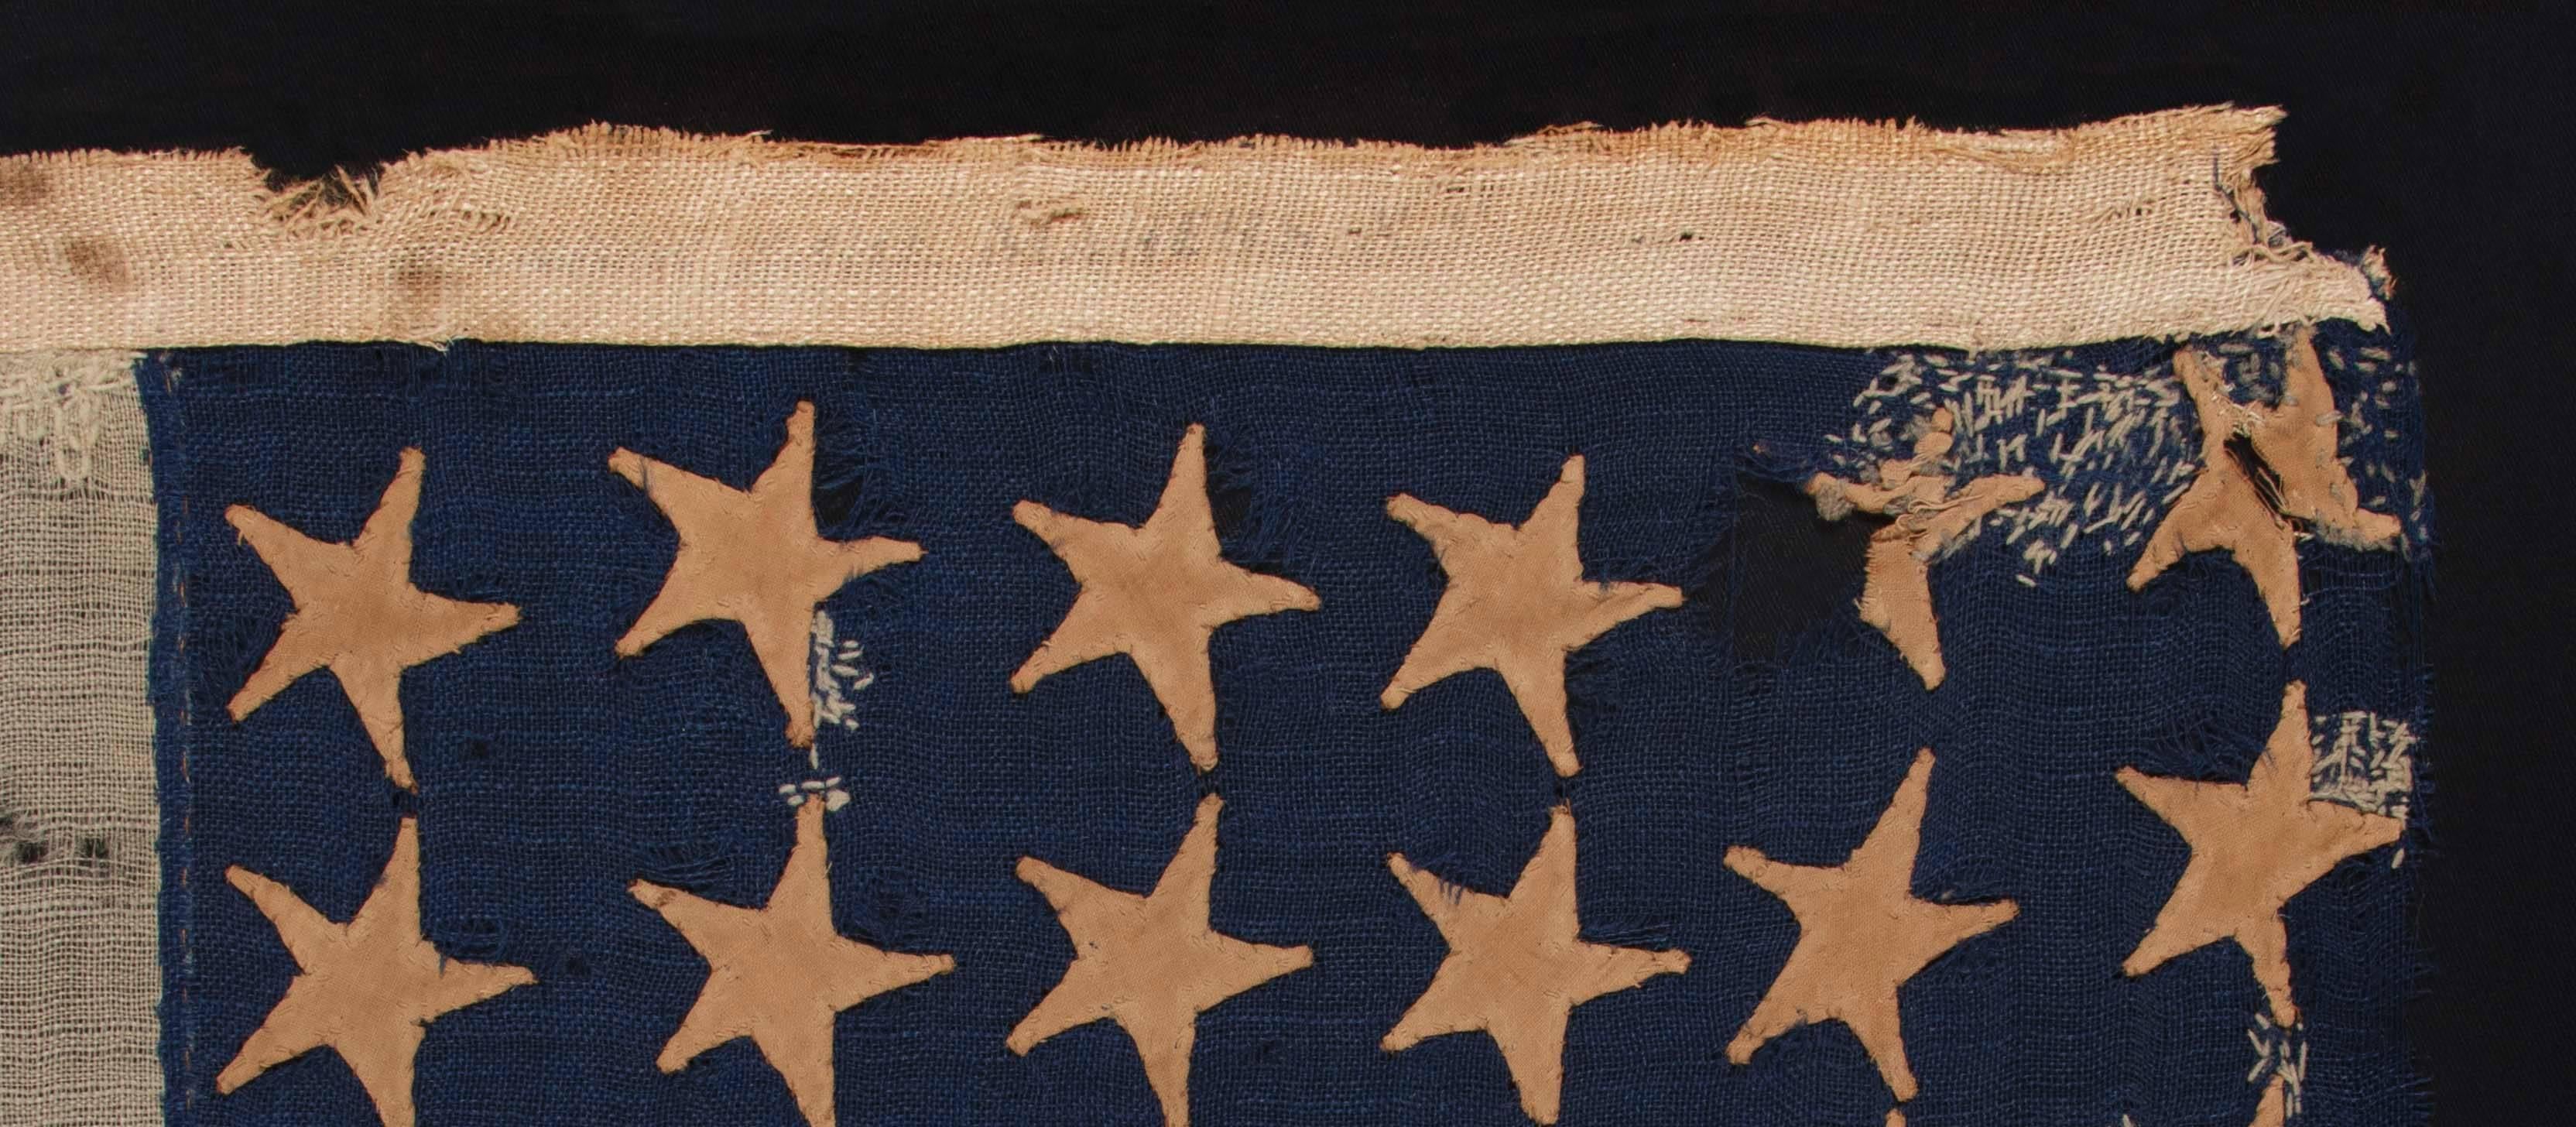 American 36-Star Hand-Sewn, Civil War Era Flag, Made by Annin in New York City